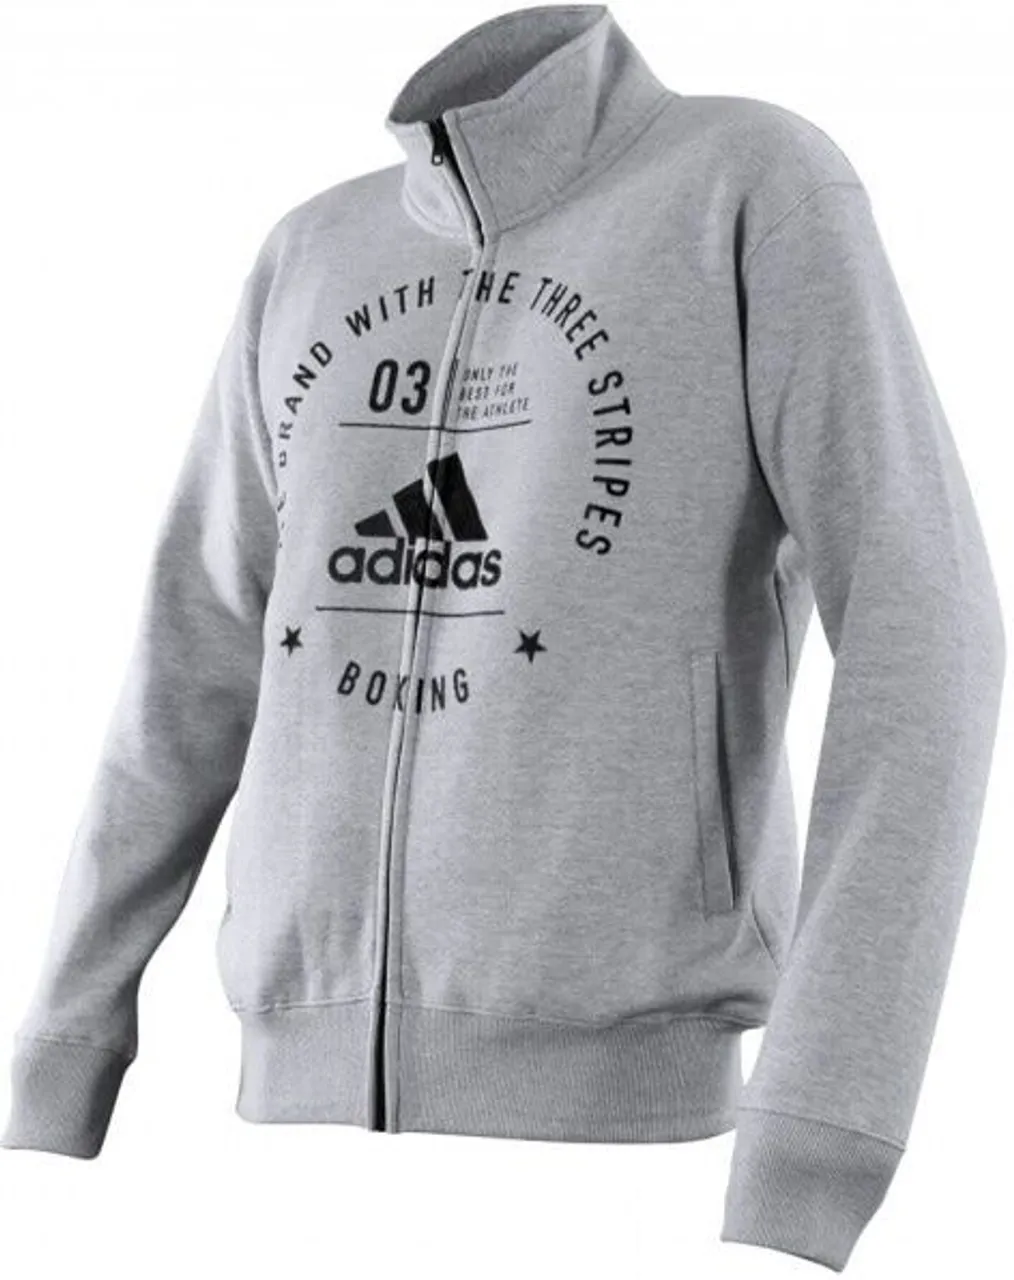 Sweatjacke ADIDAS PERFORMANCE "Community Jacket “Boxing”" Sweatjacken Gr. XXL, grau (grau, schwarz) Herren Sweatjacken